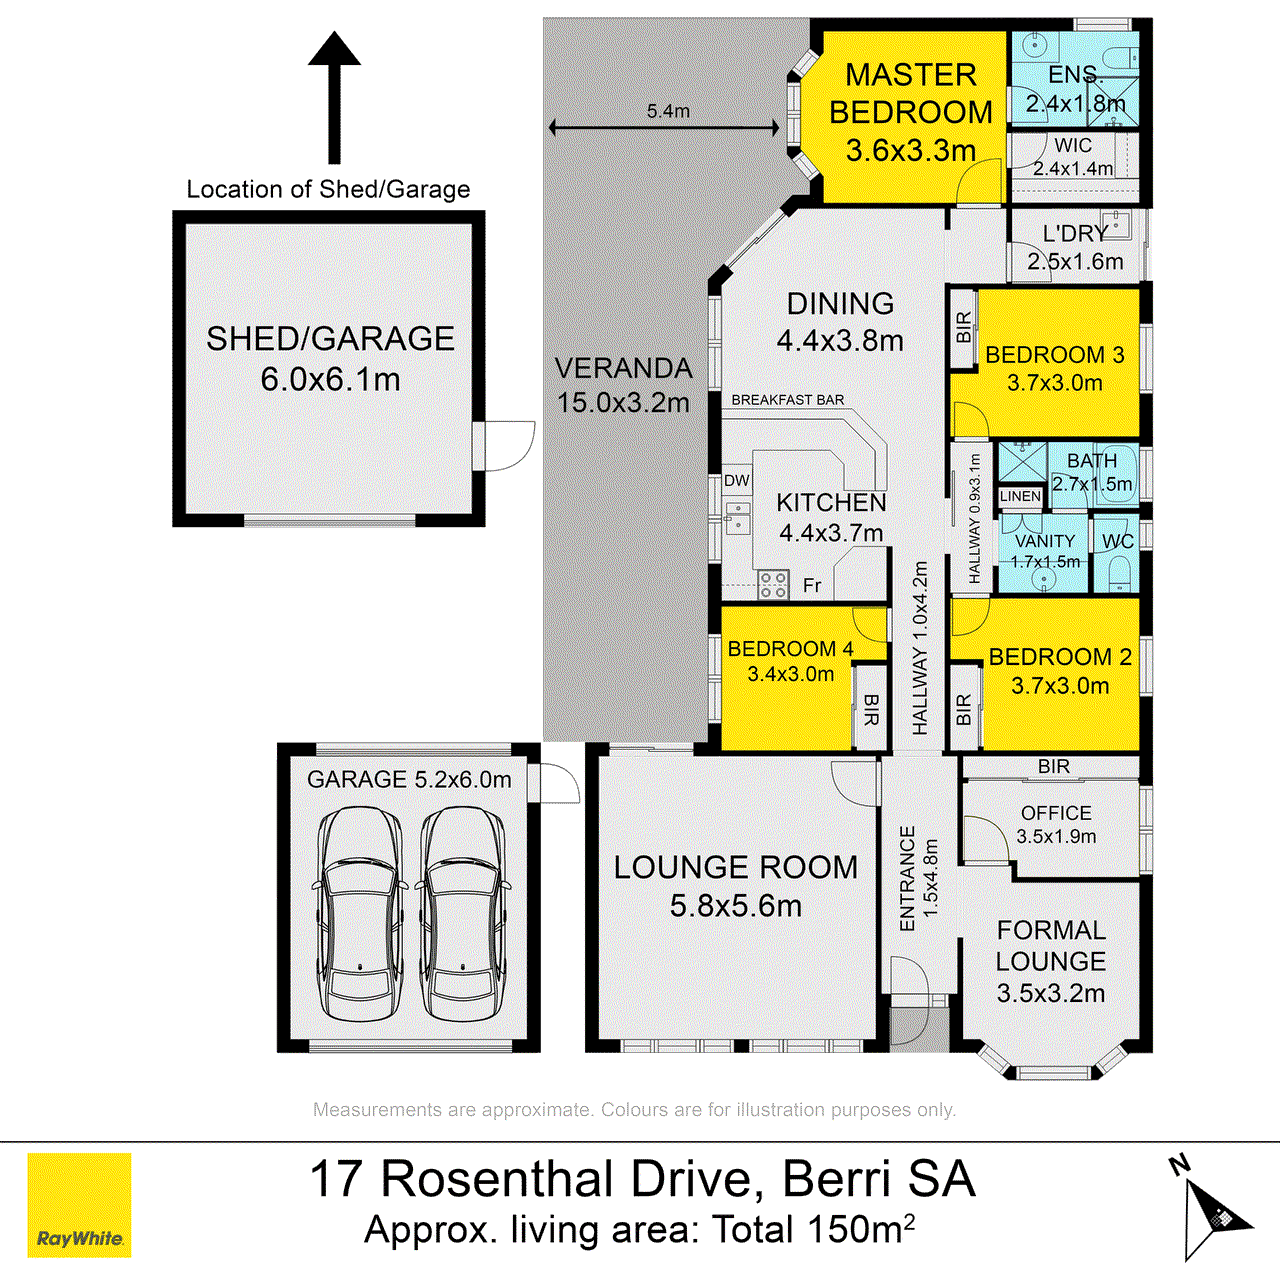 17 Rosenthal Drive, BERRI, SA 5343